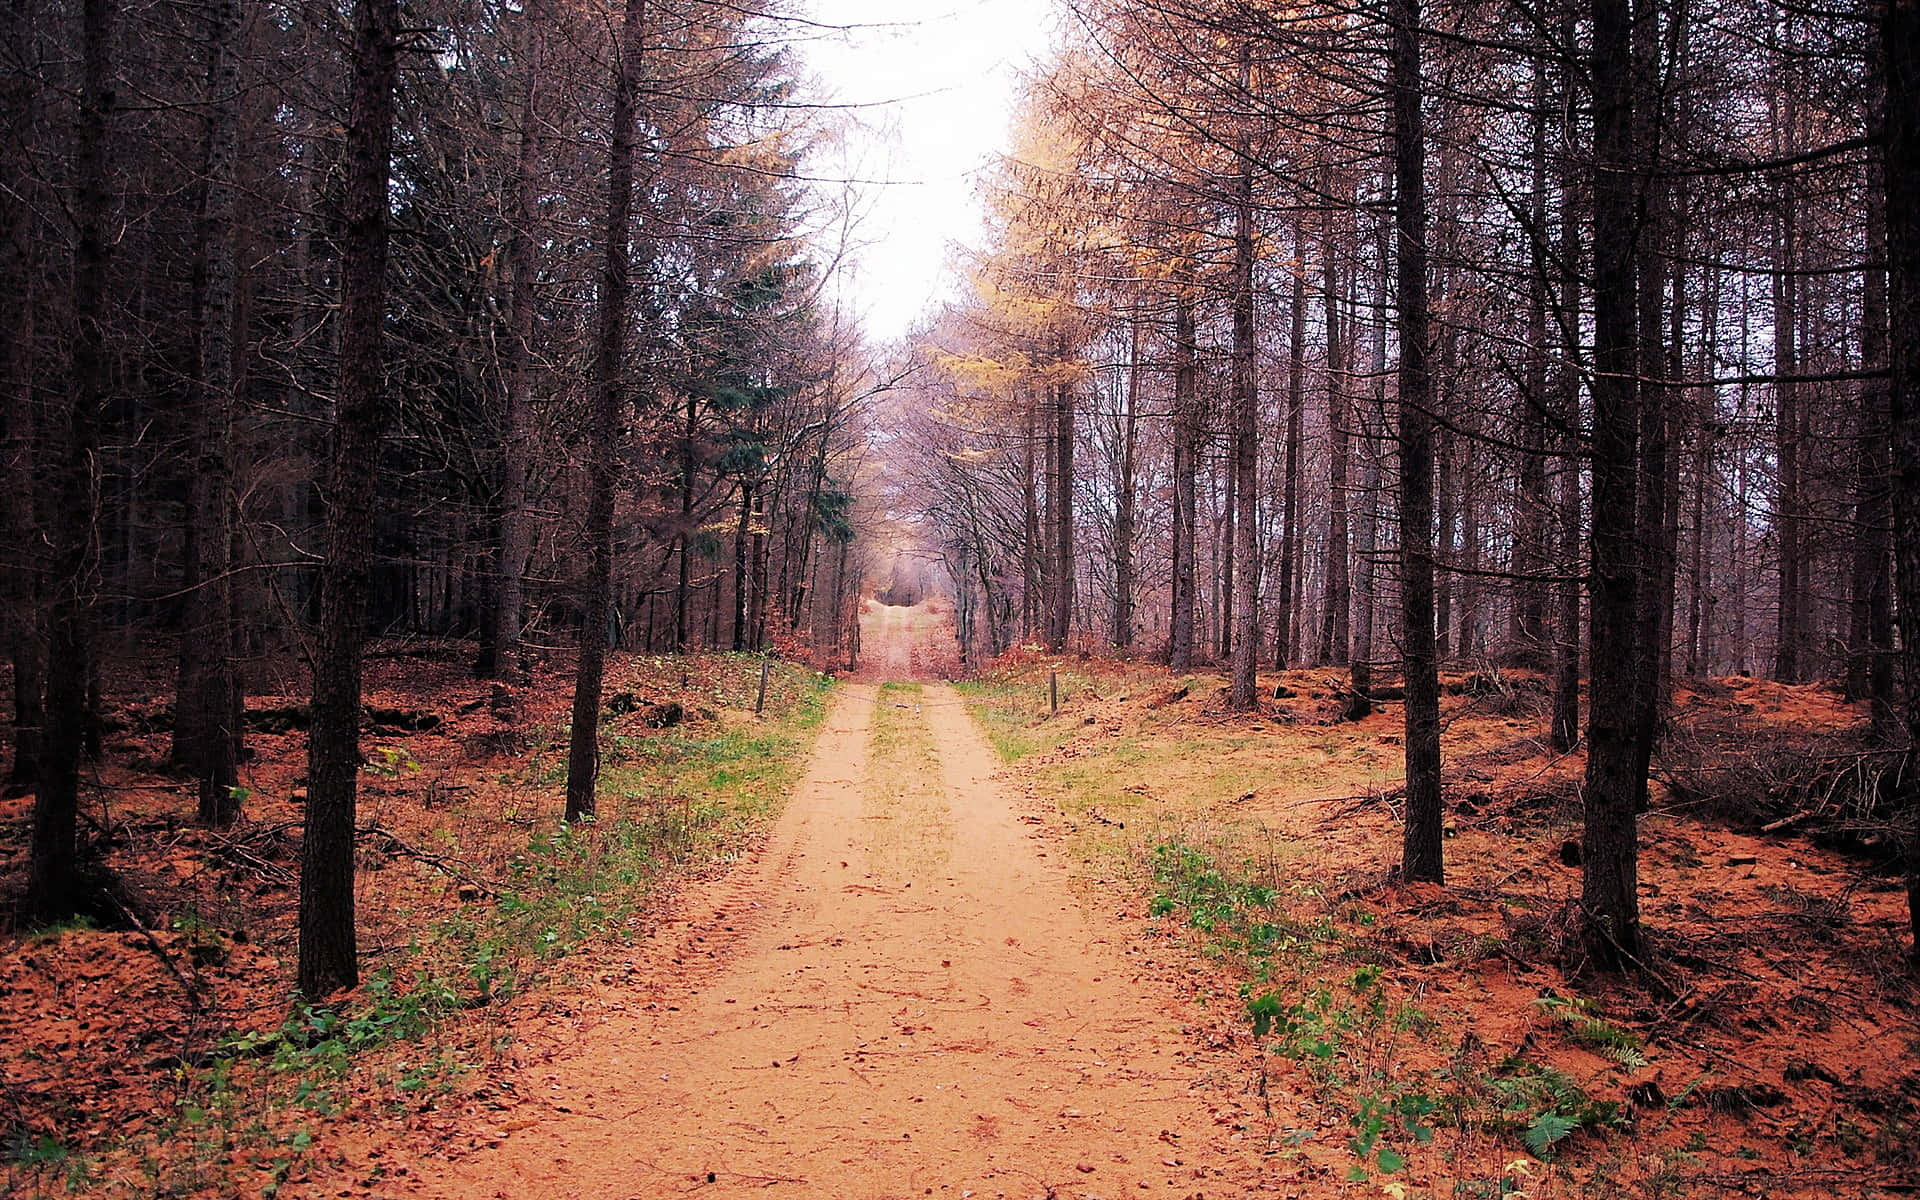 Caption: Scenic Autumn Trails in Vibrant Forest Wallpaper